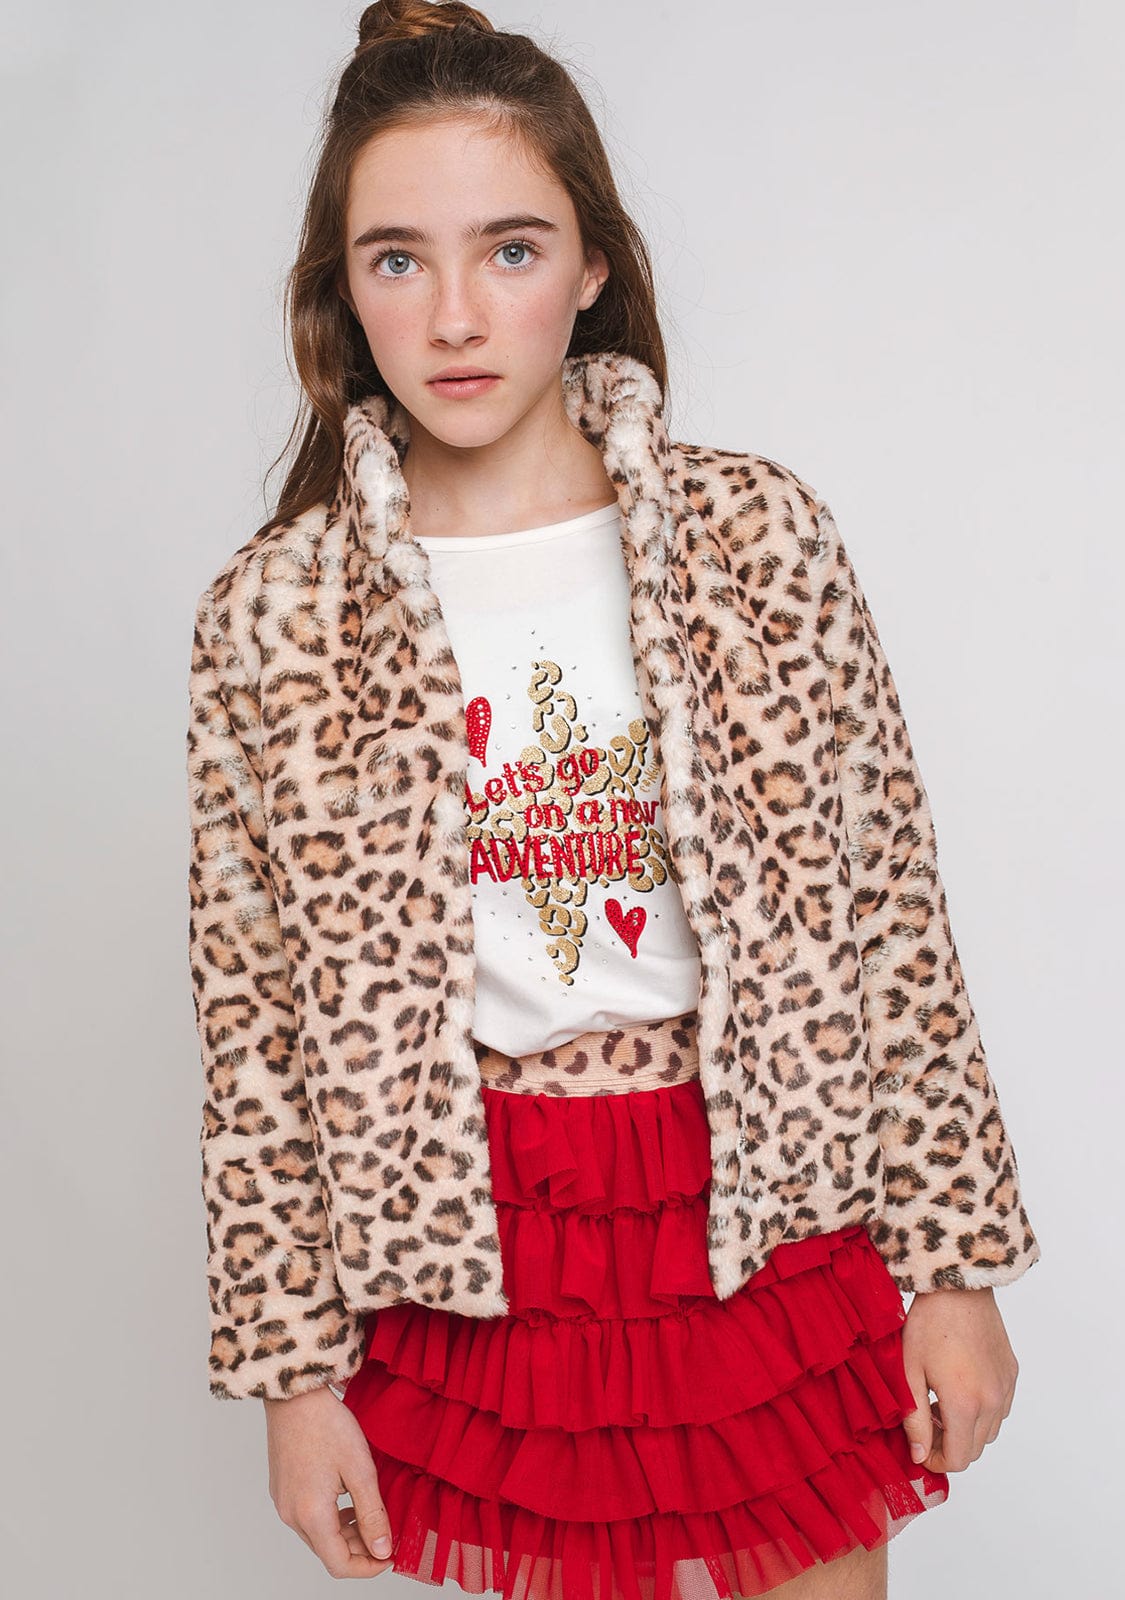 CONGUITOS TEXTIL Clothing Girl's Leopard Fur Coat